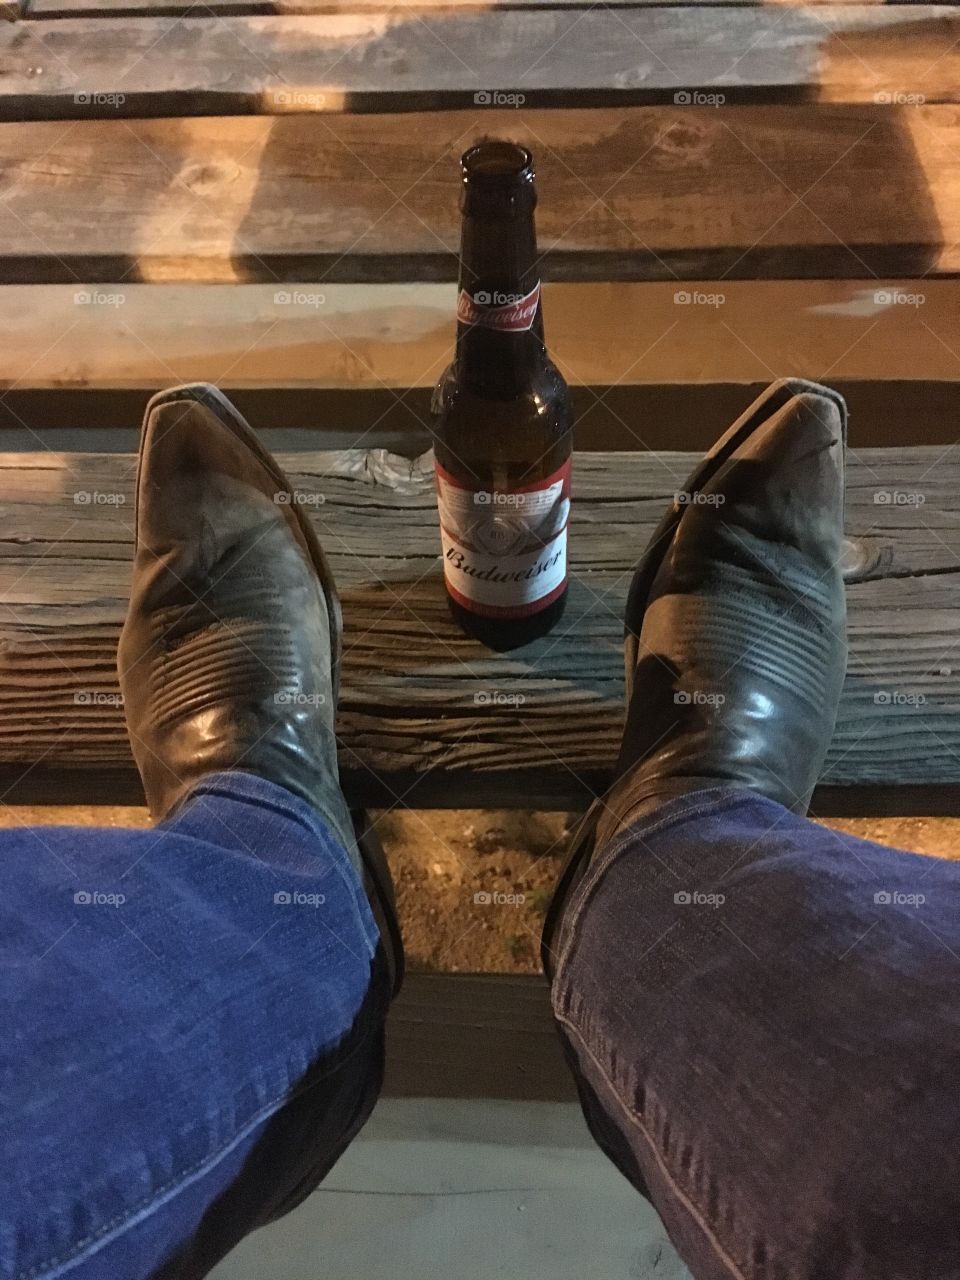 Bud 'n' Boots